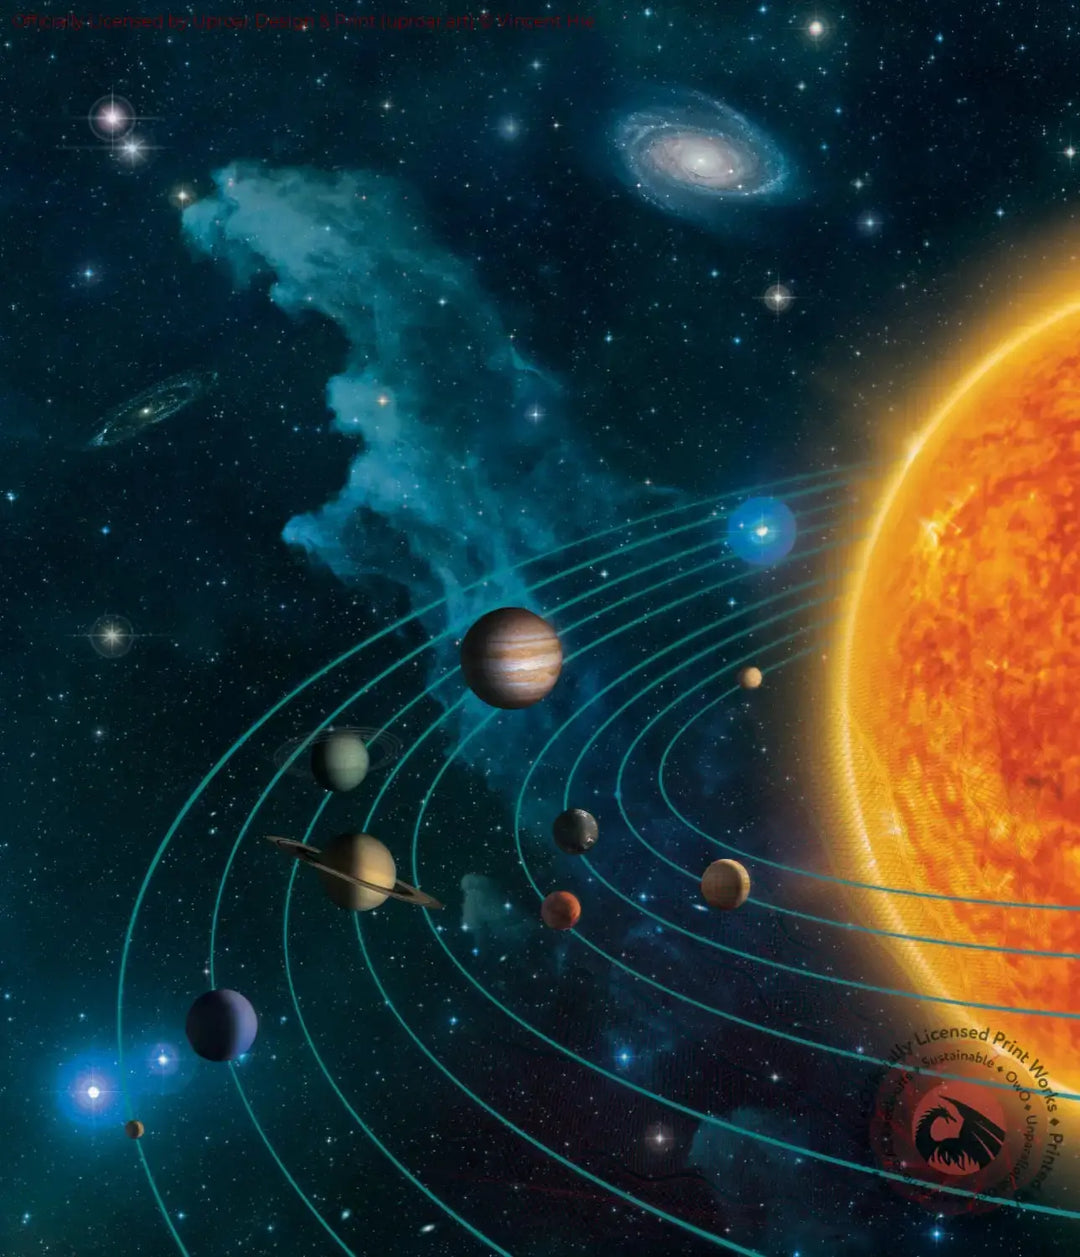 Solar System Posters Prints & Visual Artwork